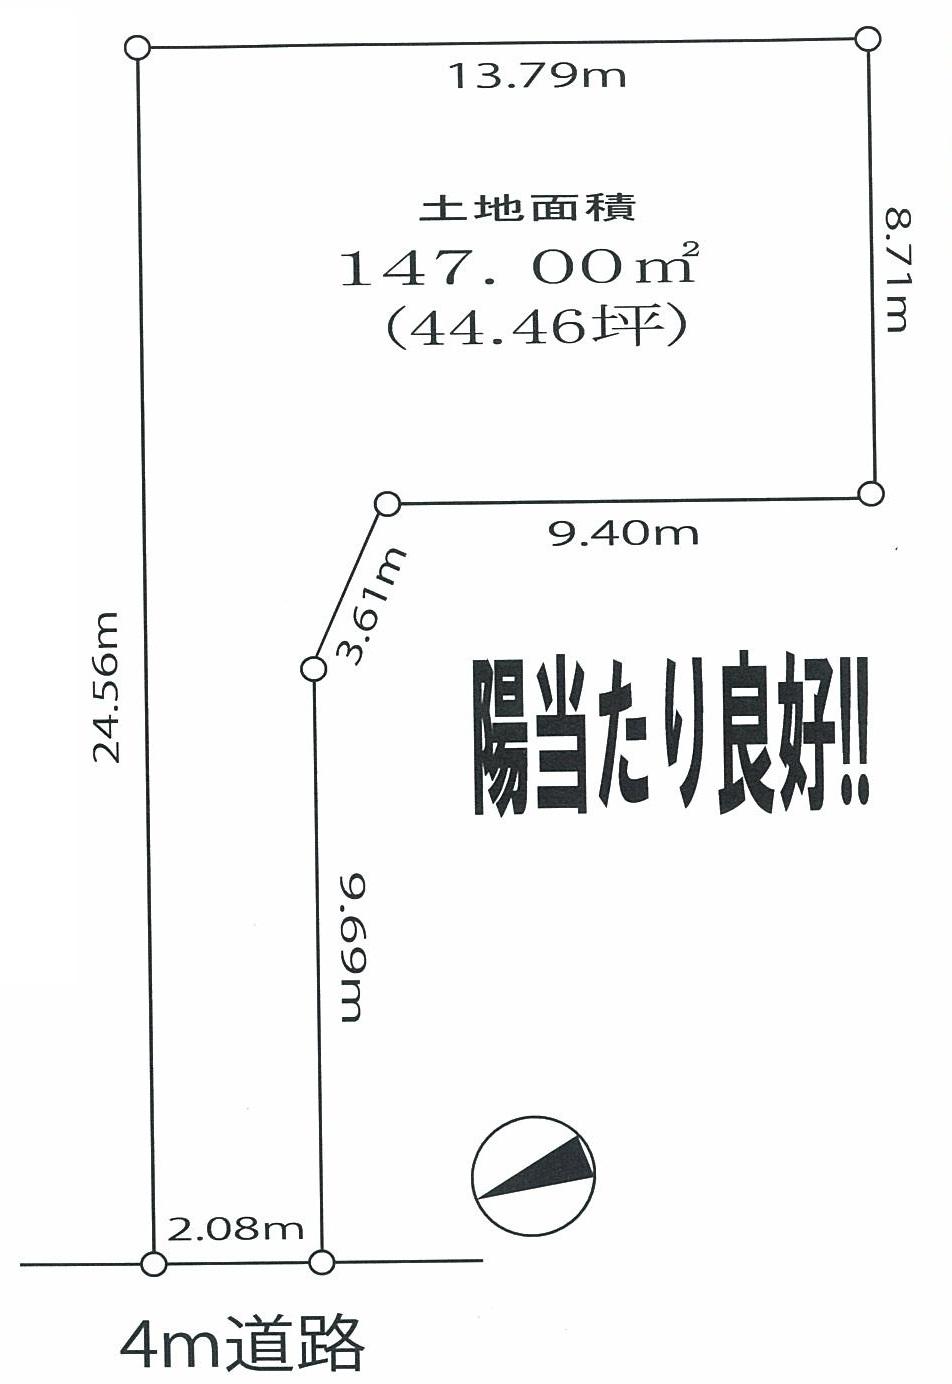 Compartment figure. Land price 11.8 million yen, Land area 147 sq m compartment view